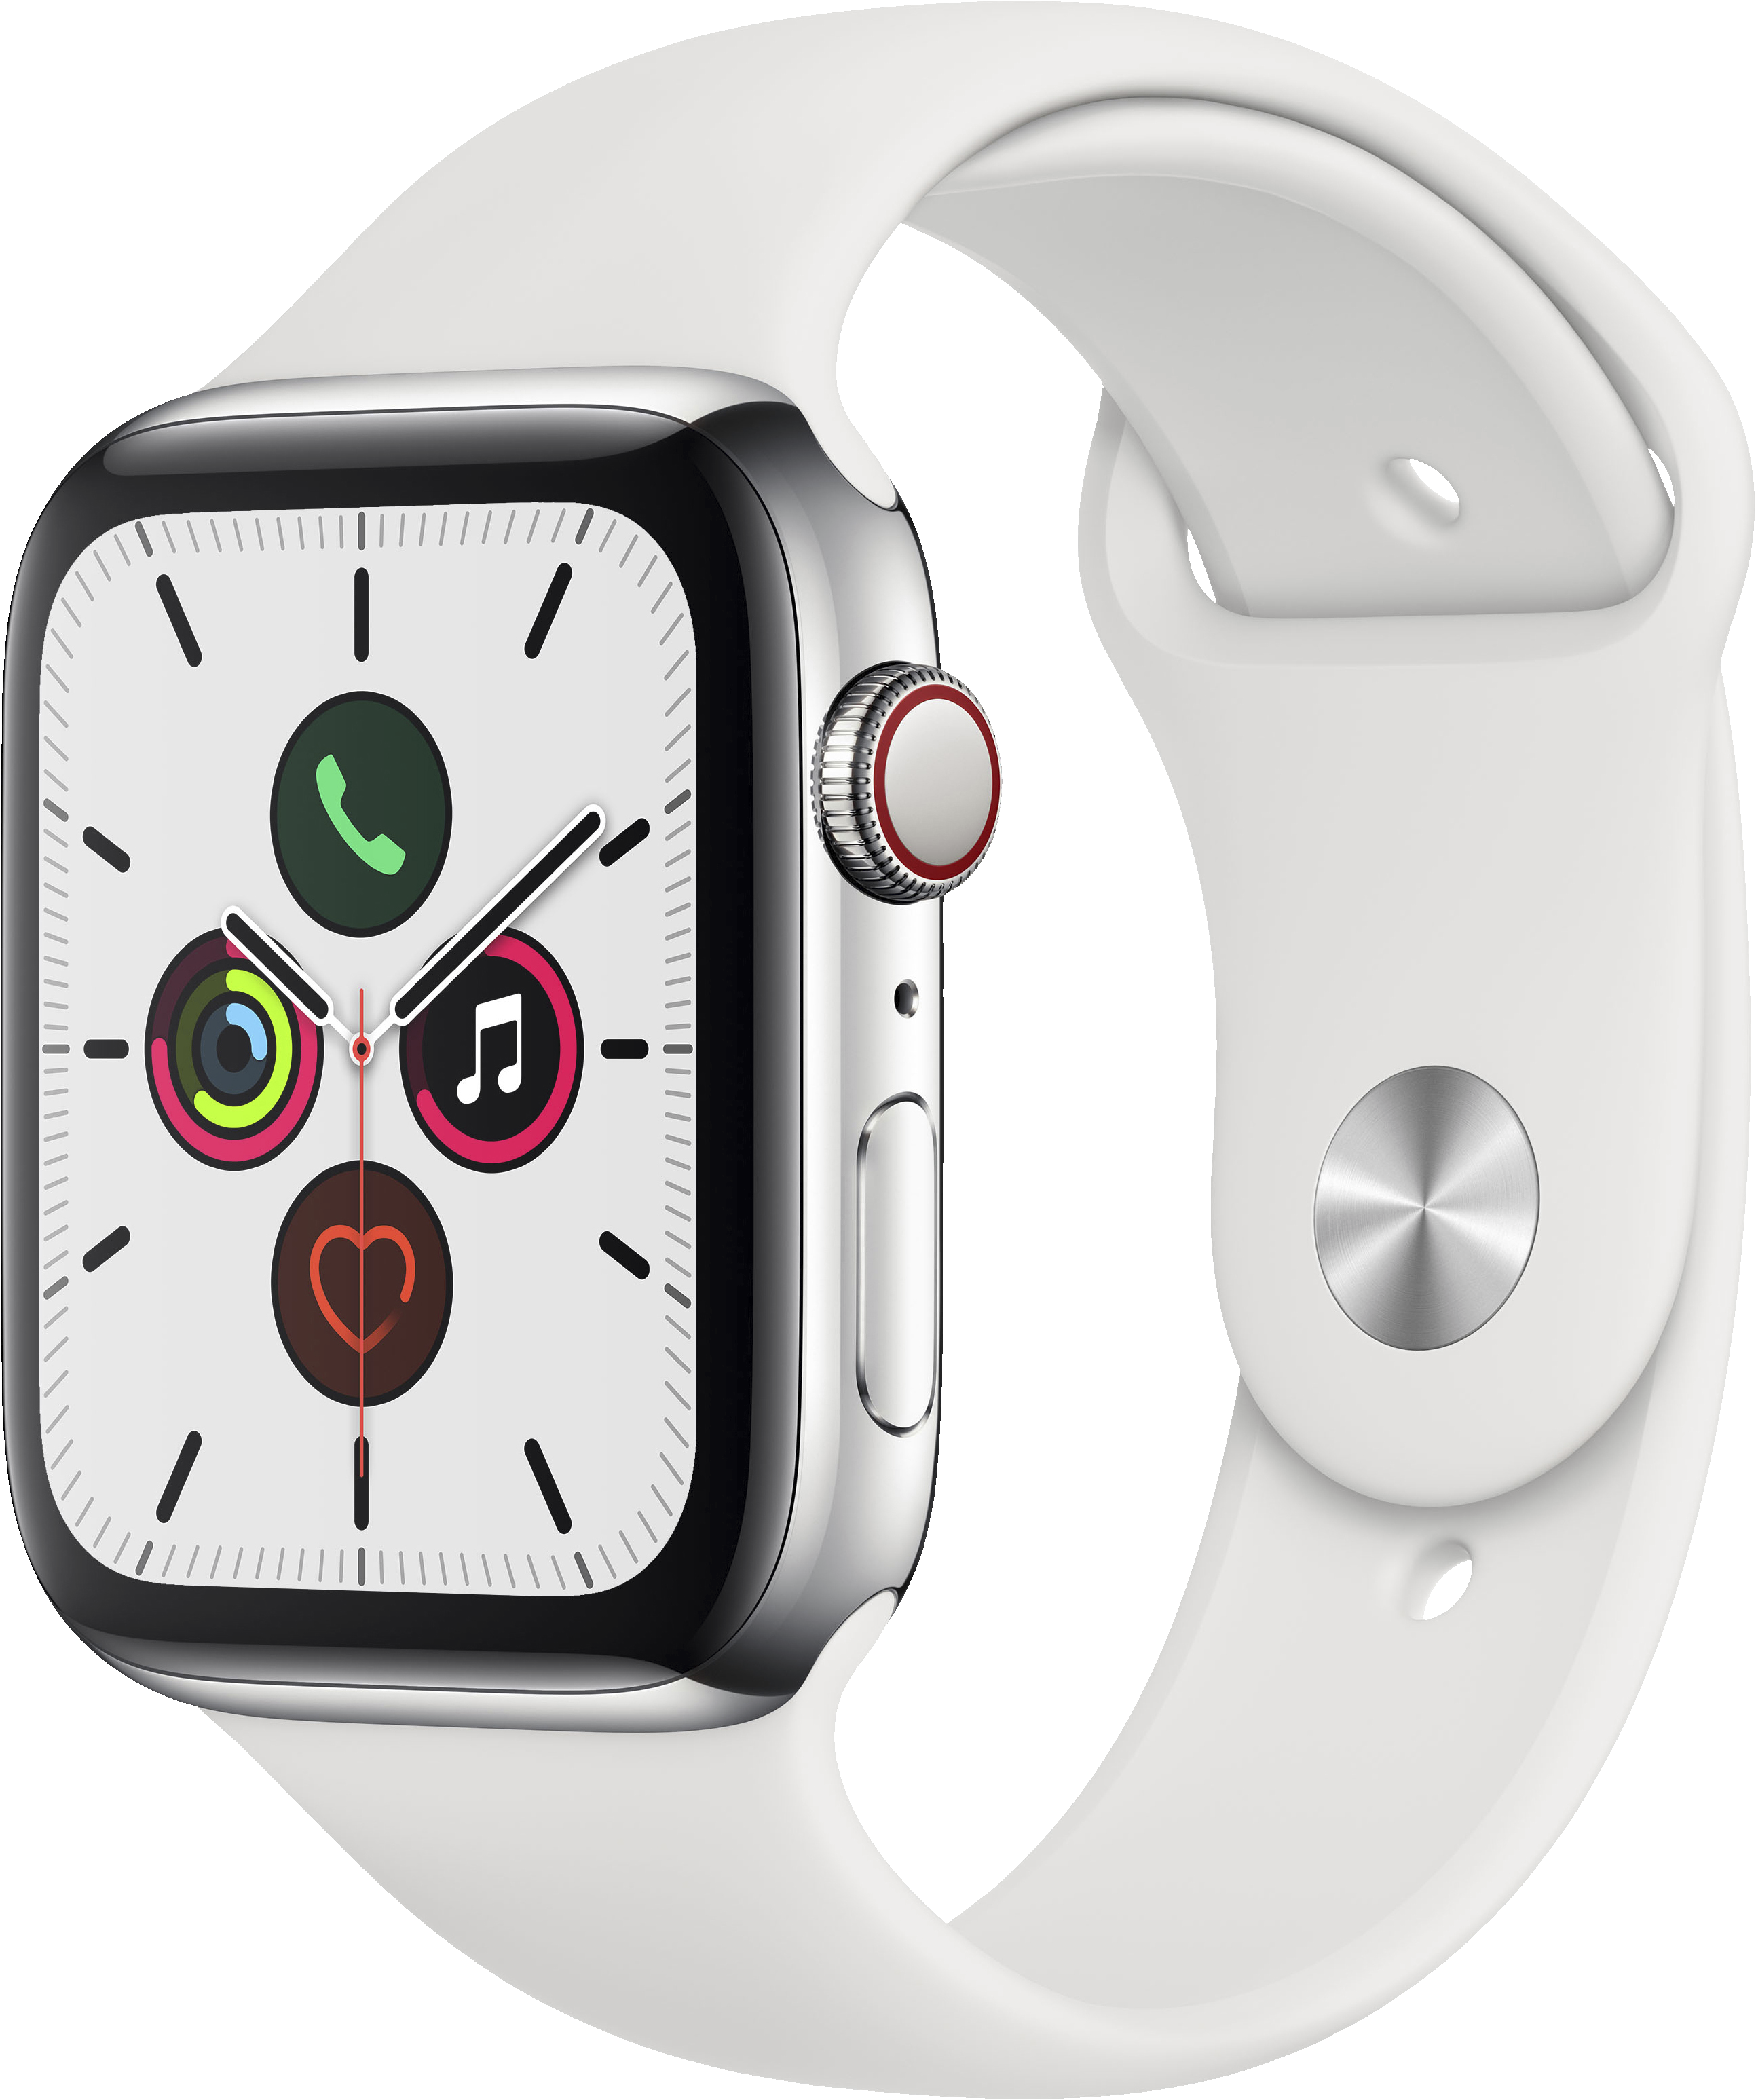 Apple Watch Series 5 44mm (GPS + mobil täckning) - Smartwatch ...